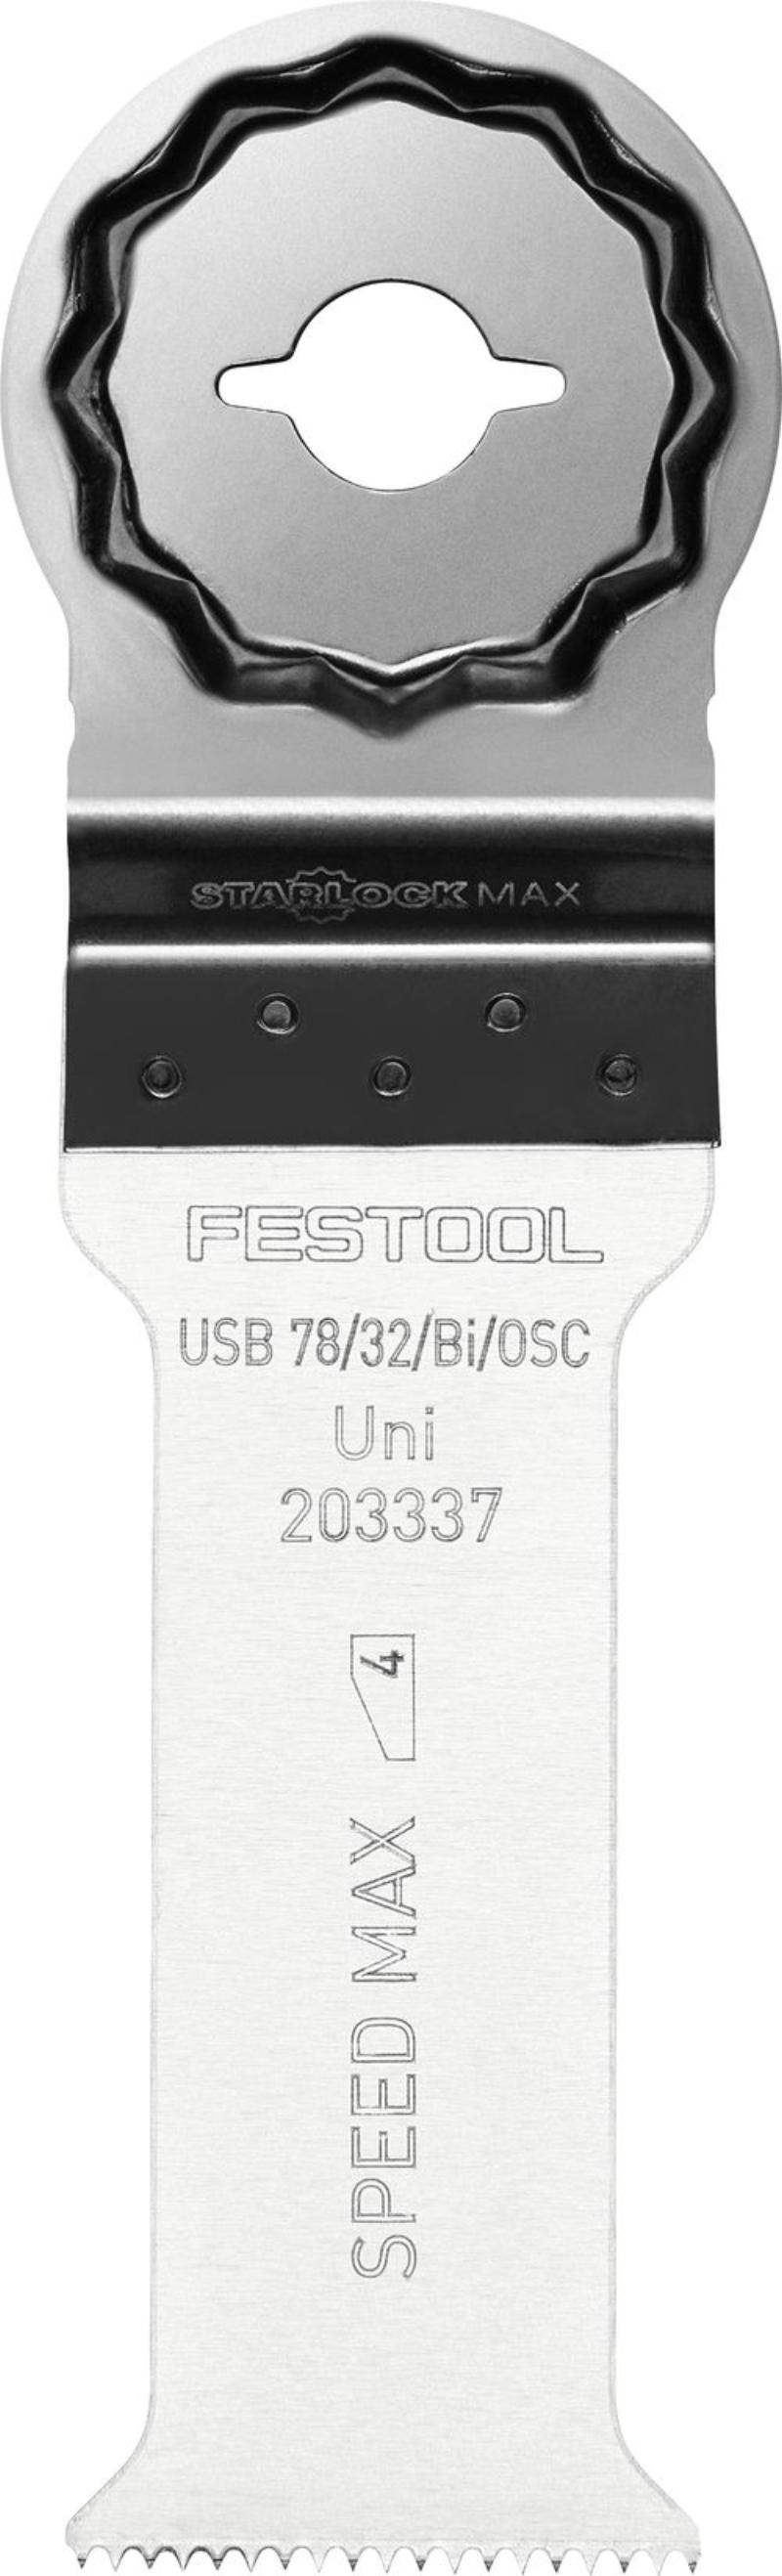 Festool Universal saw blade USB 78/32/Bi/OSC, 1 pc